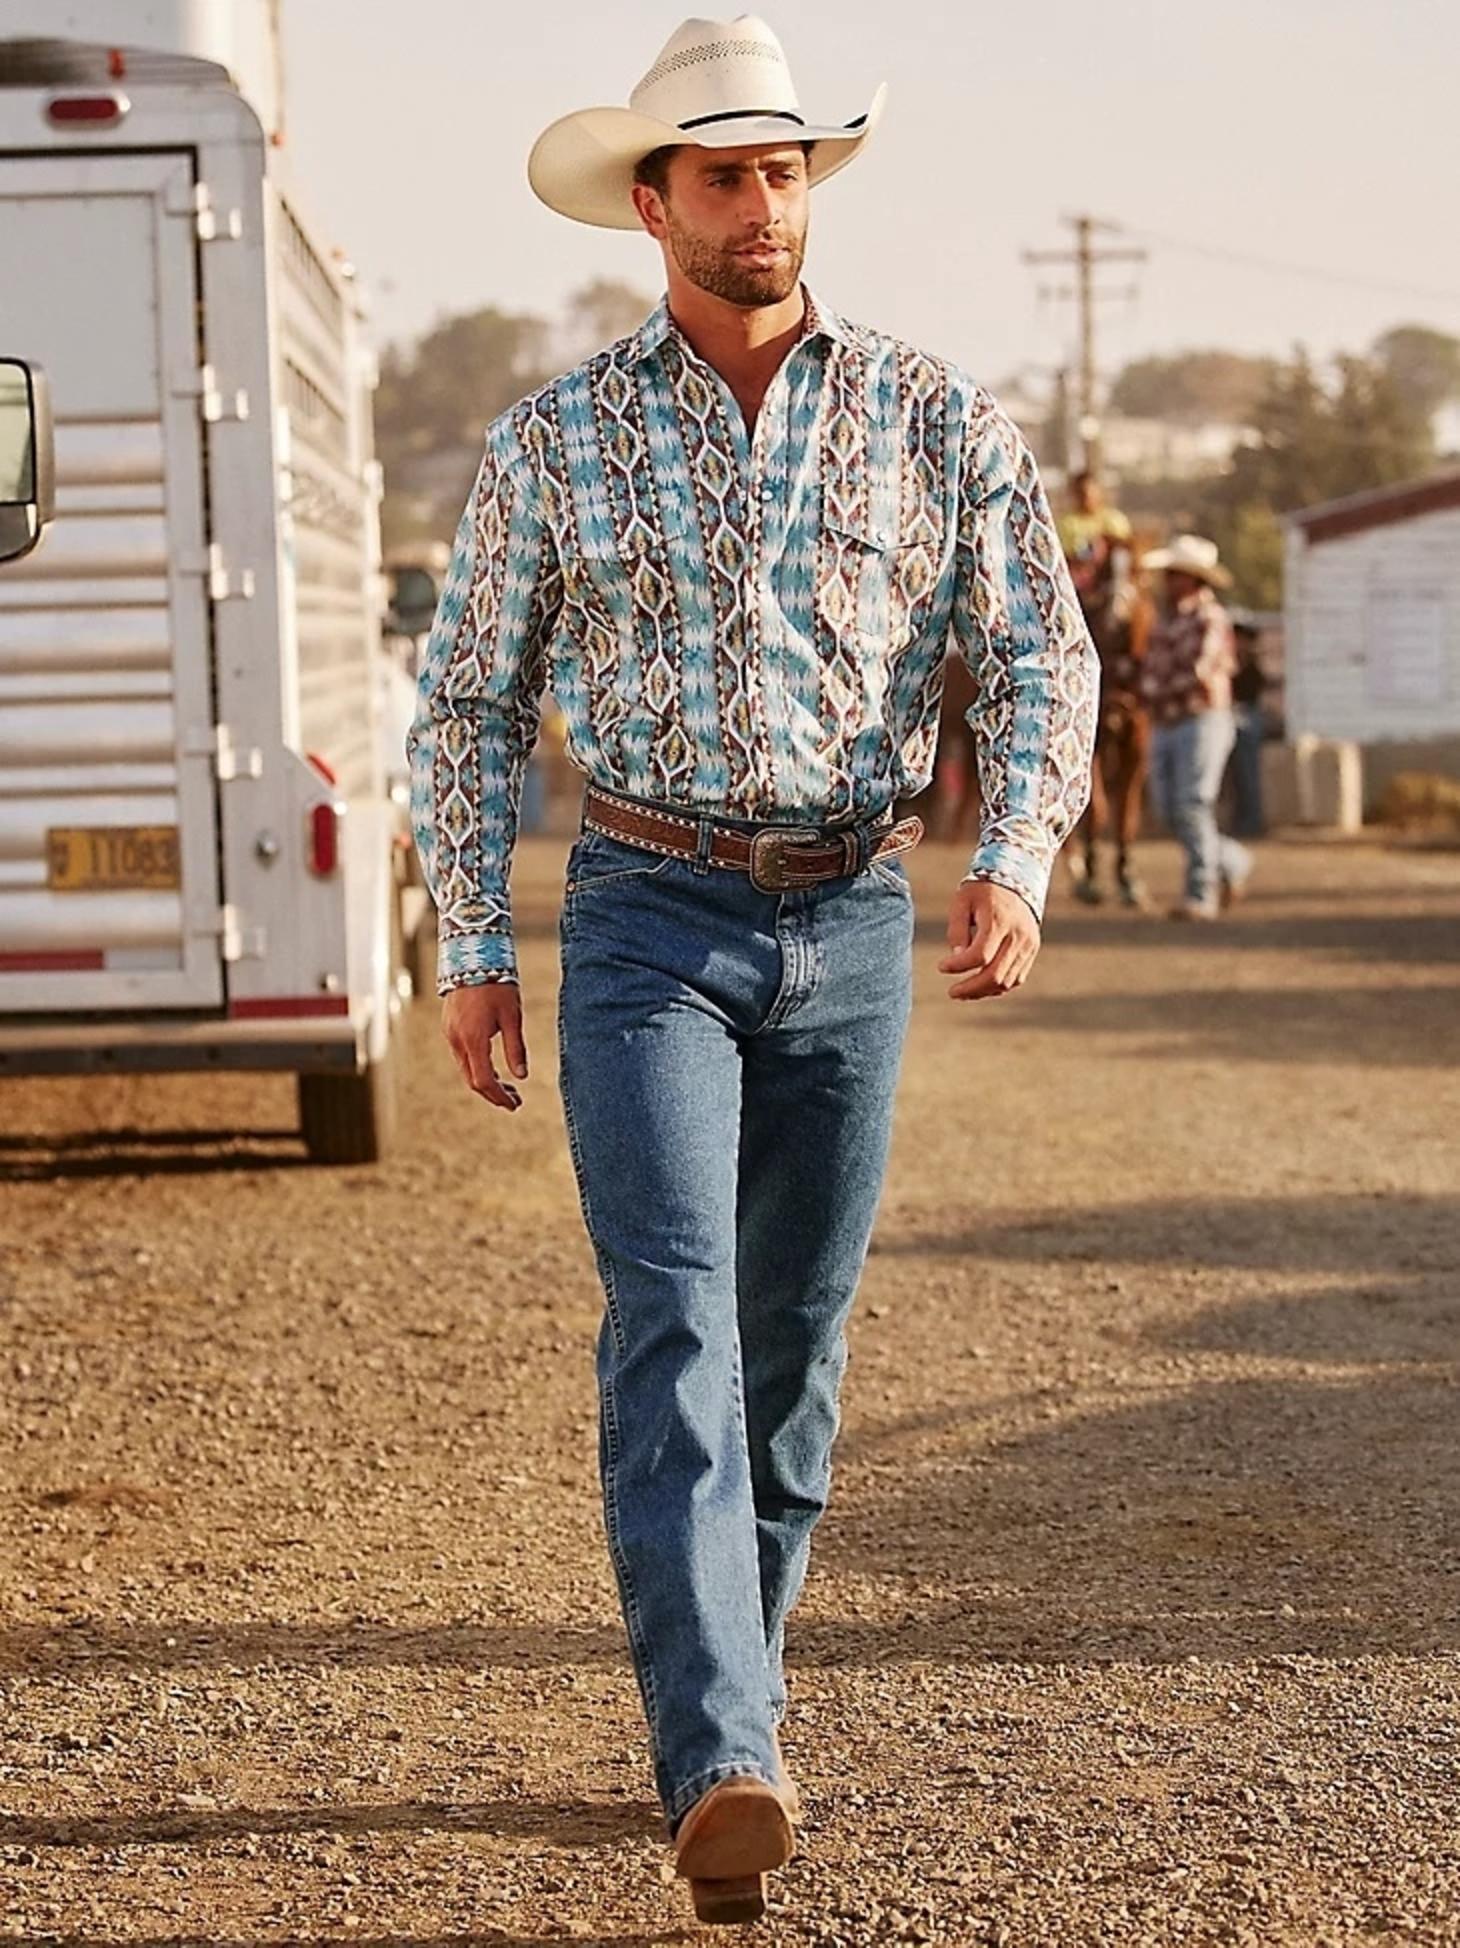 Wrangler® Cowboy Cut® Original Fit Jean In Stonewashed